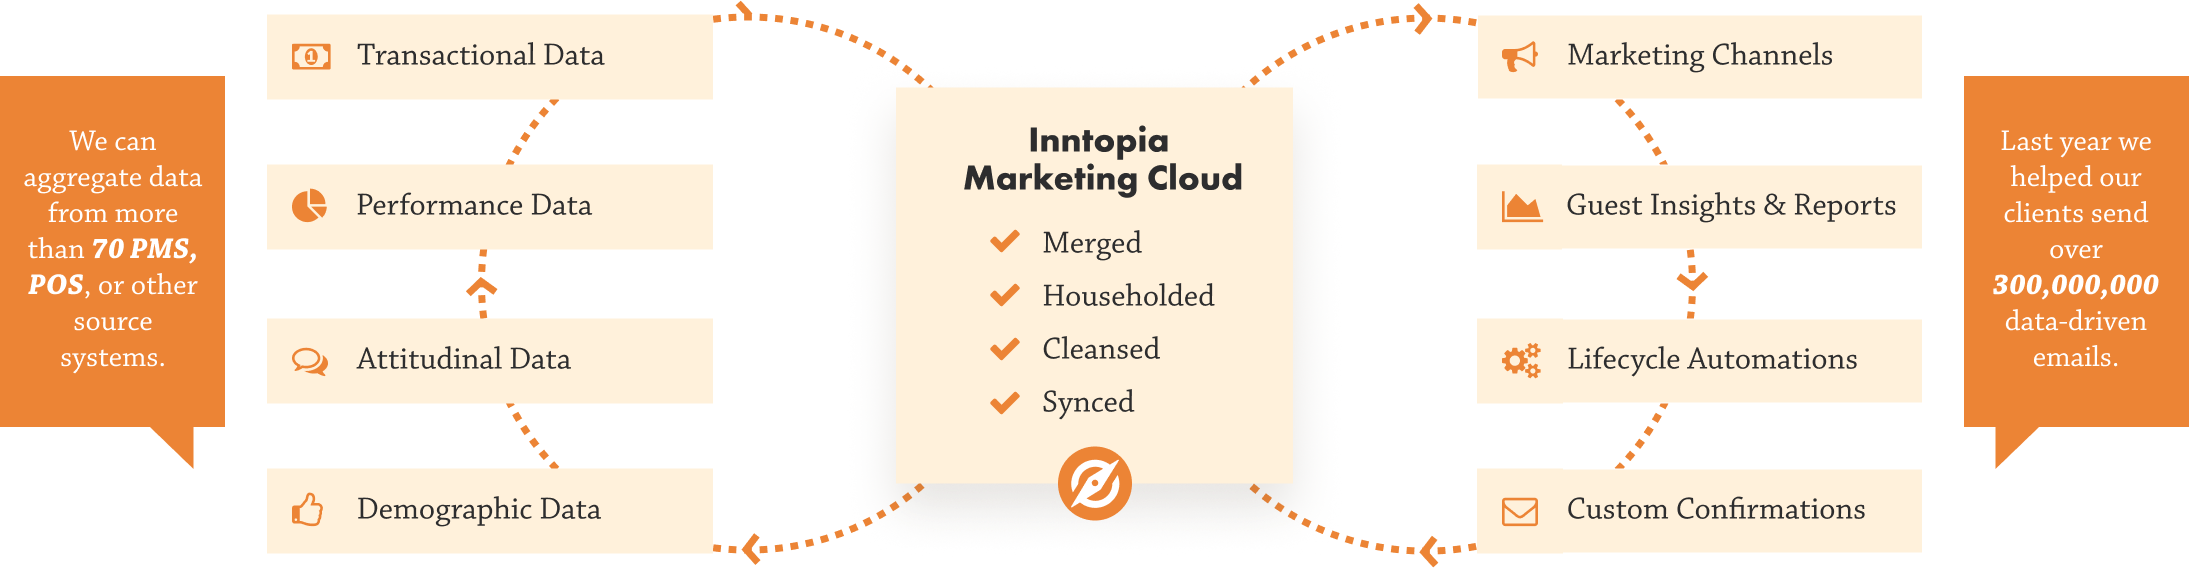 chart showing how data flows through inntopia marketing cloud system